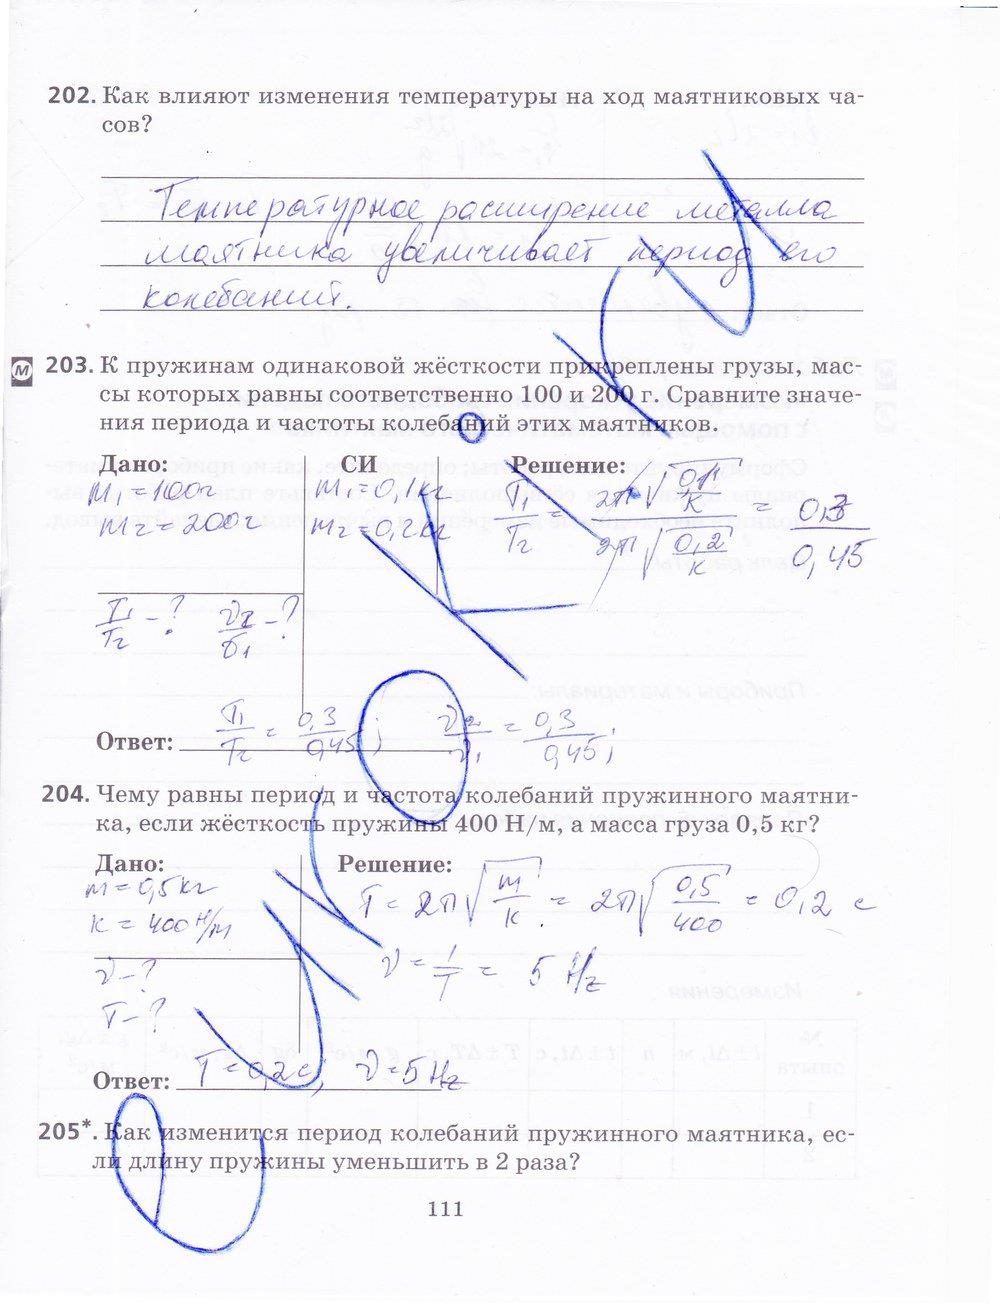 гдз 9 класс рабочая тетрадь страница 111 физика Пурышева, Важеевская, Чаругин